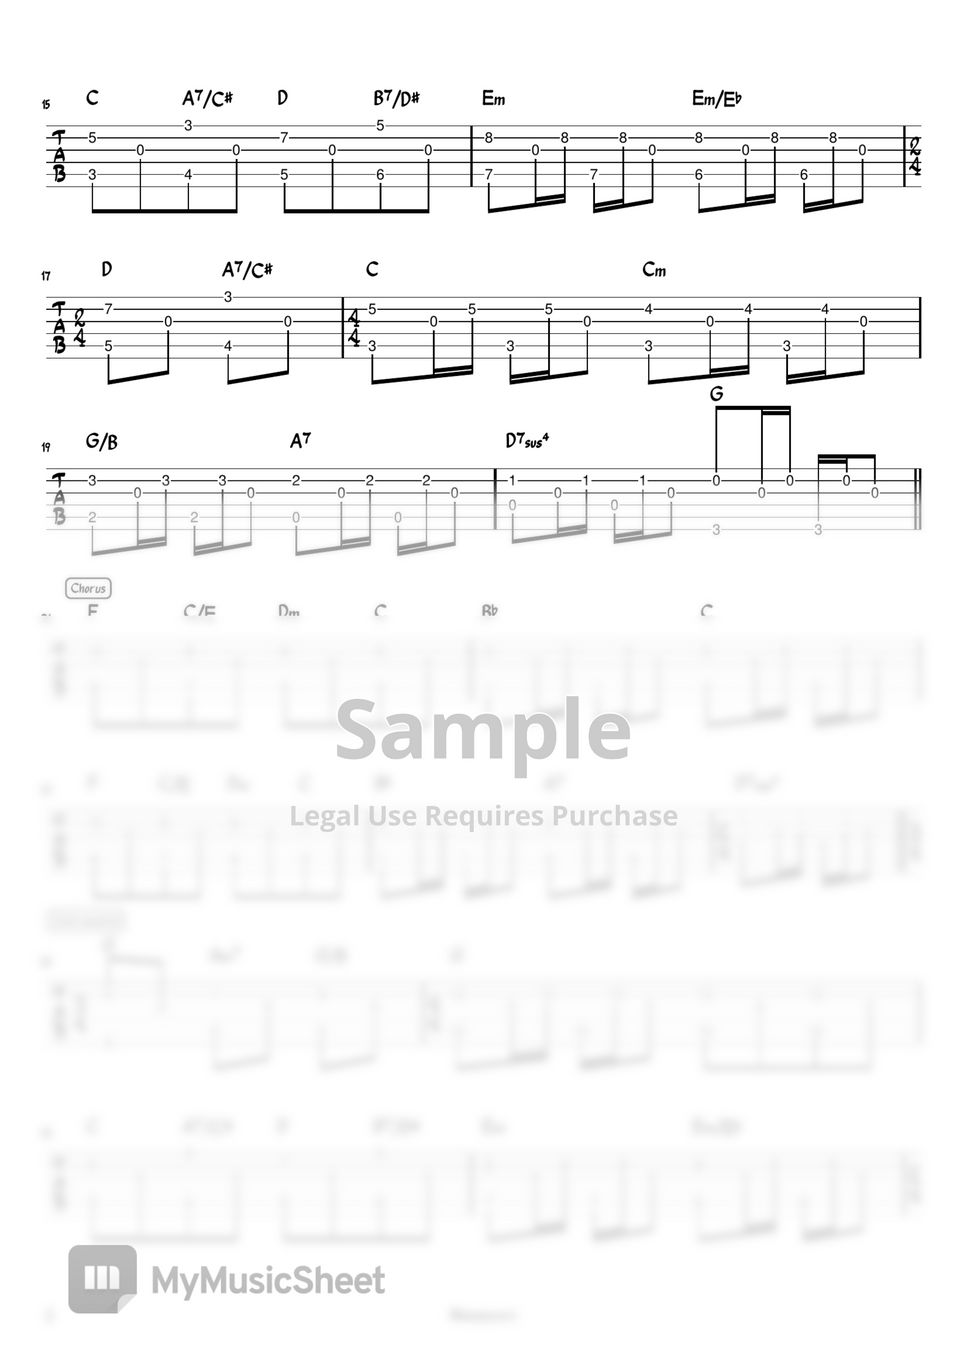 The Beatles - Blackbird (Sheet Music + TAB) by Meowscore